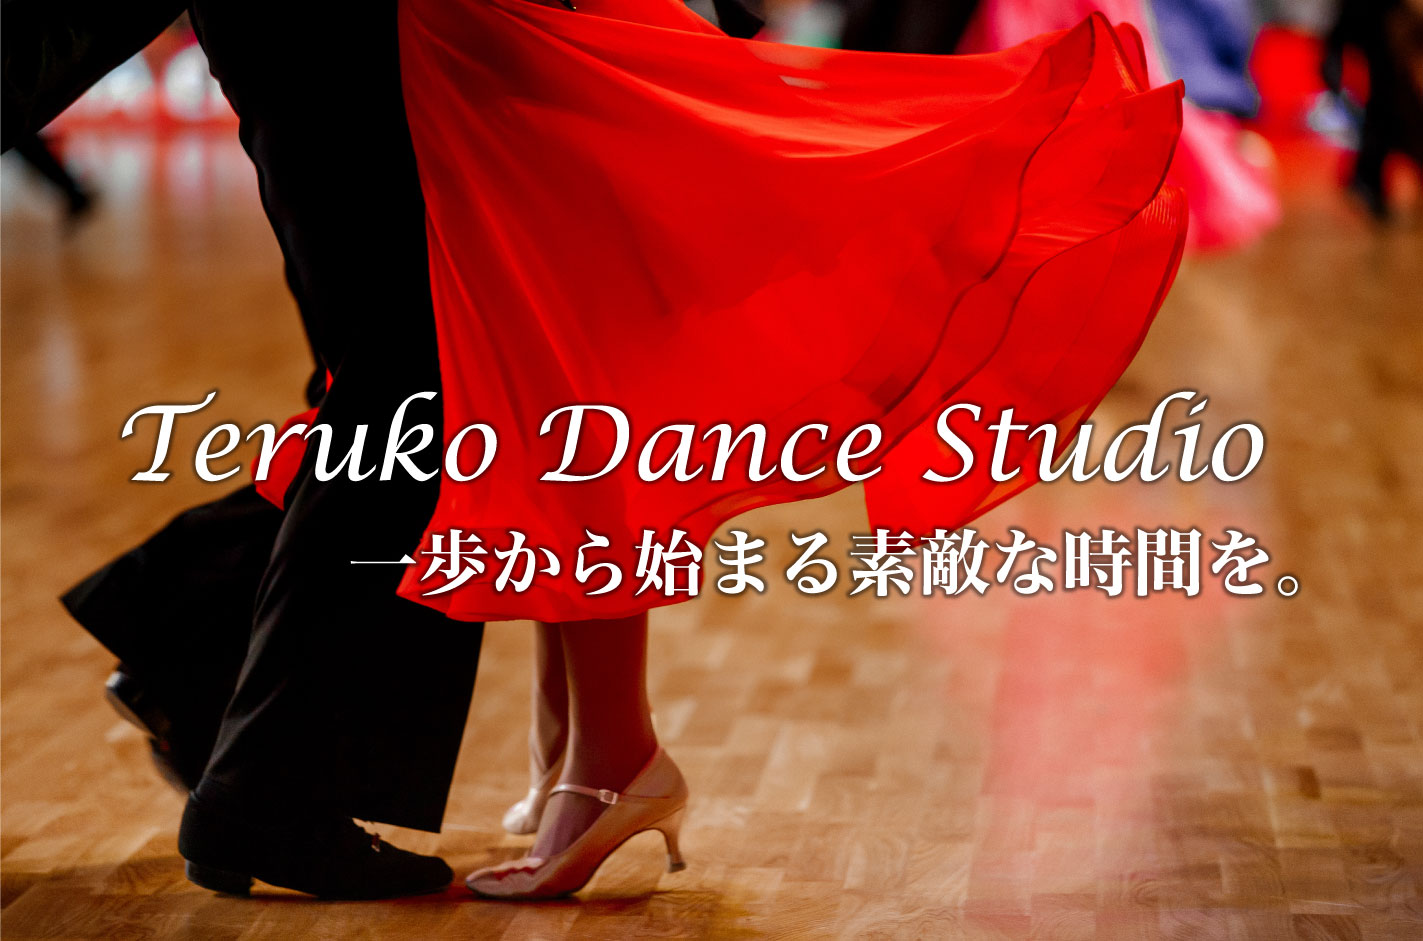 Teruko Dance Studio 一歩から始まる素敵な時間を